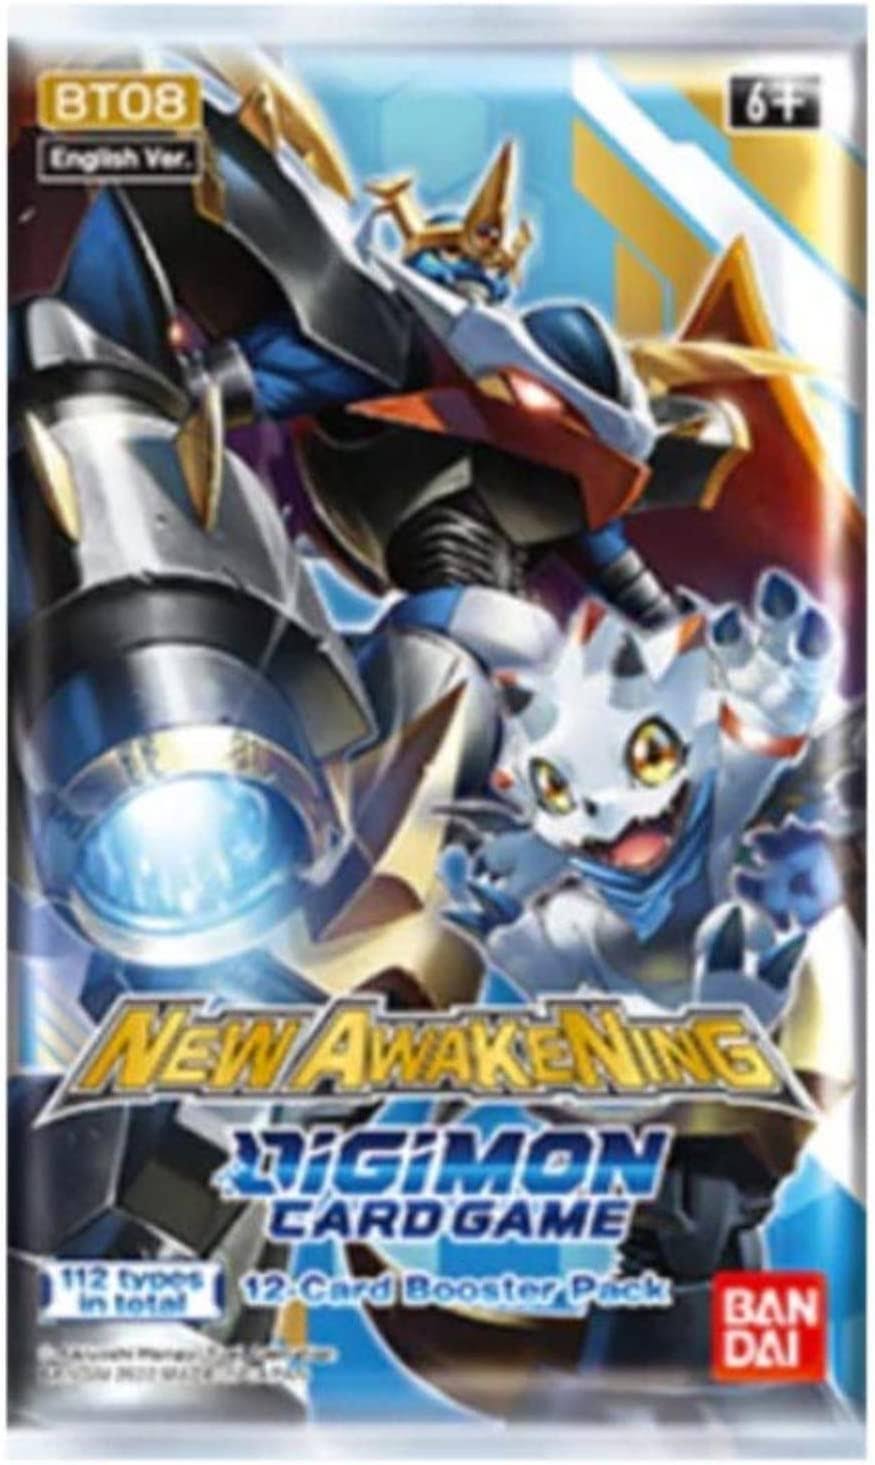 Digimon Card Game - BT08 - New Awakening - Booster Pack